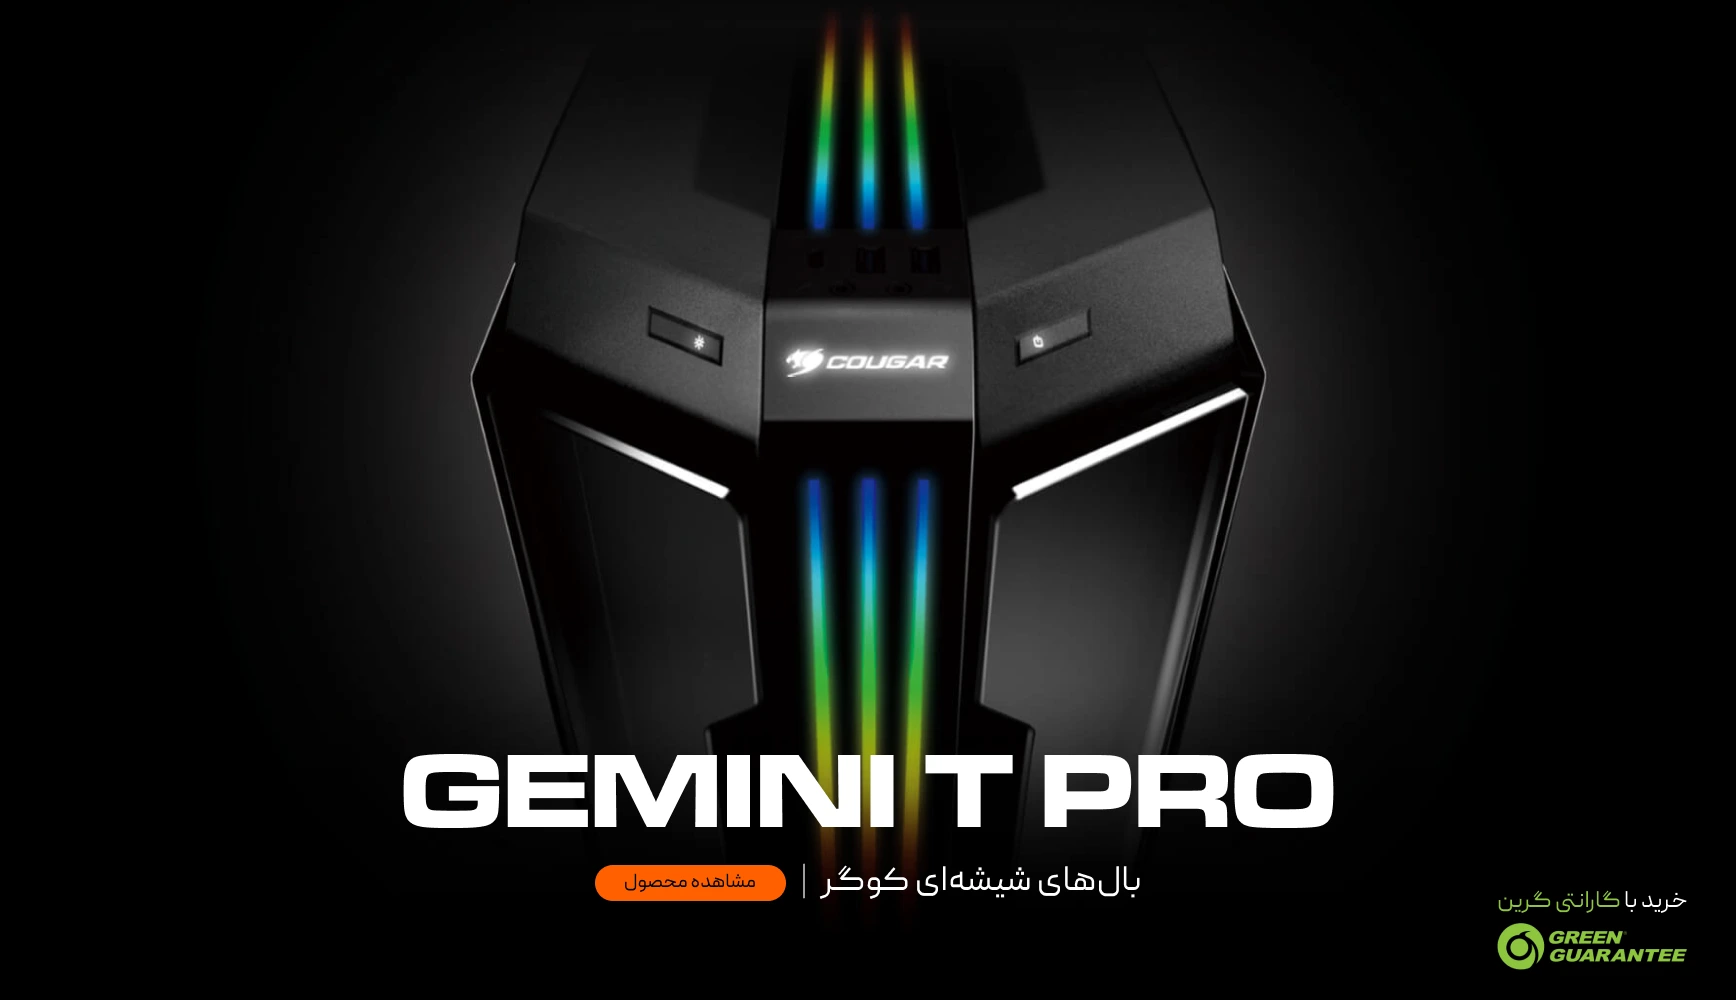 خرید کیس گیمینگ کوگر Gemini T Pro